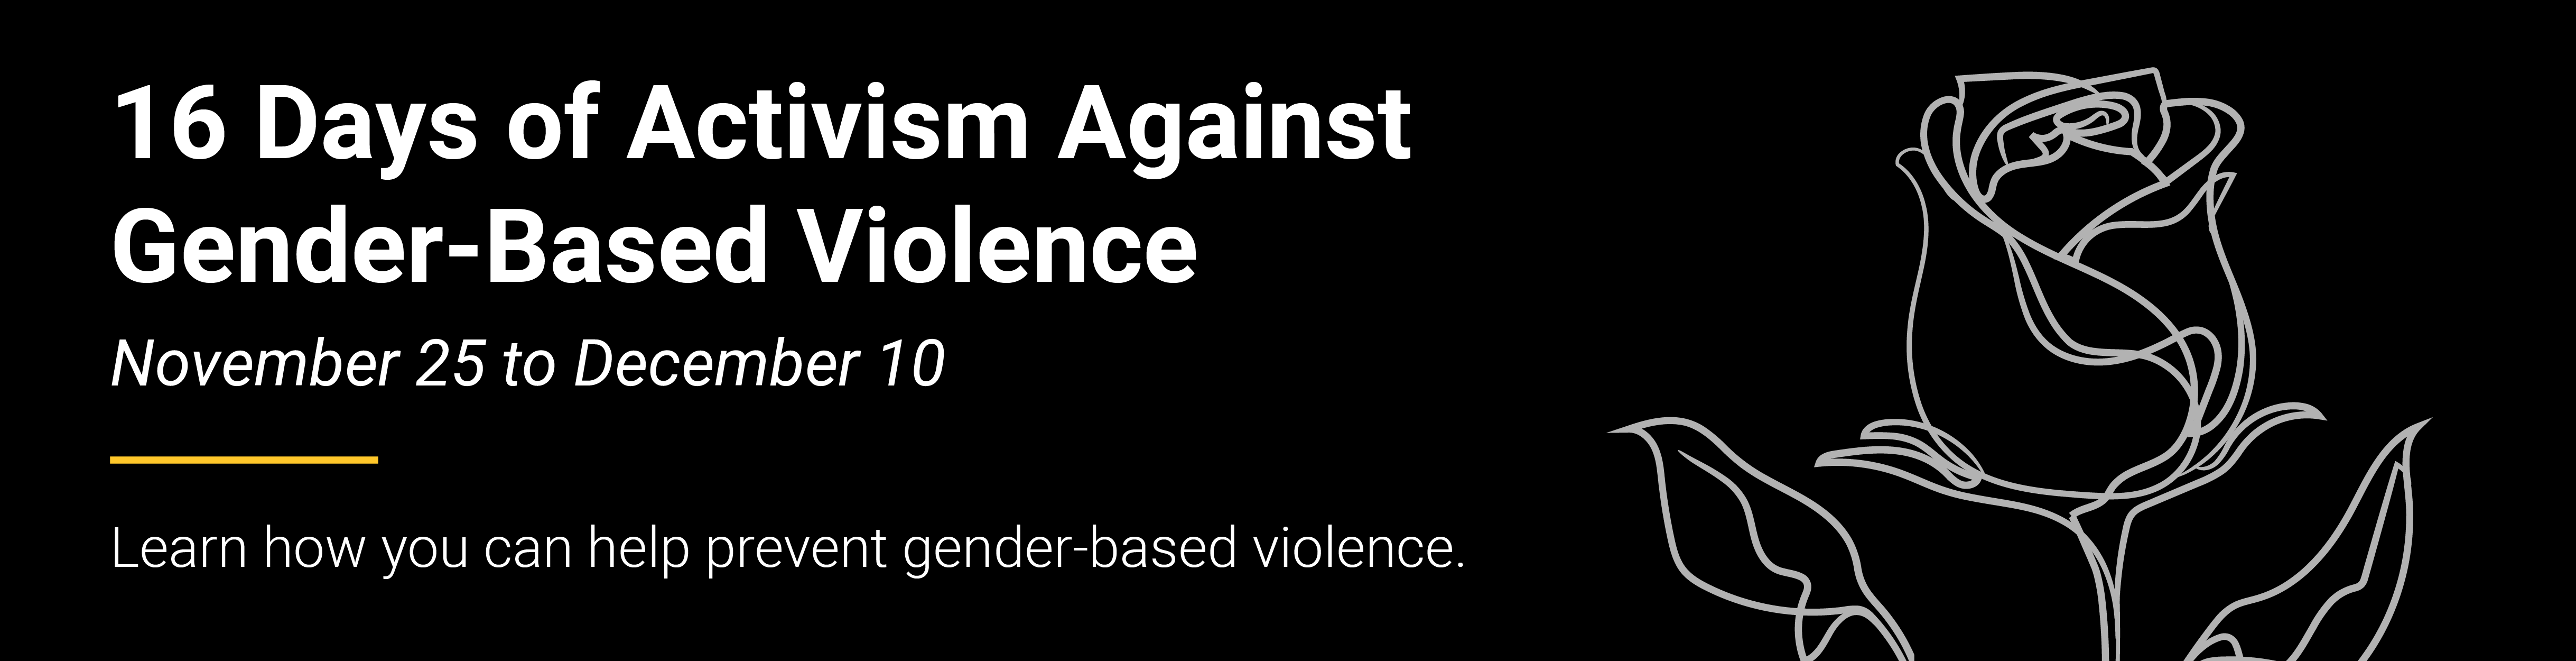 16 Days of Activism Against Gender-Based Violence. November 25 to December 10. Learn how you can help prevent gender-based violence. A purple outline of a rose.